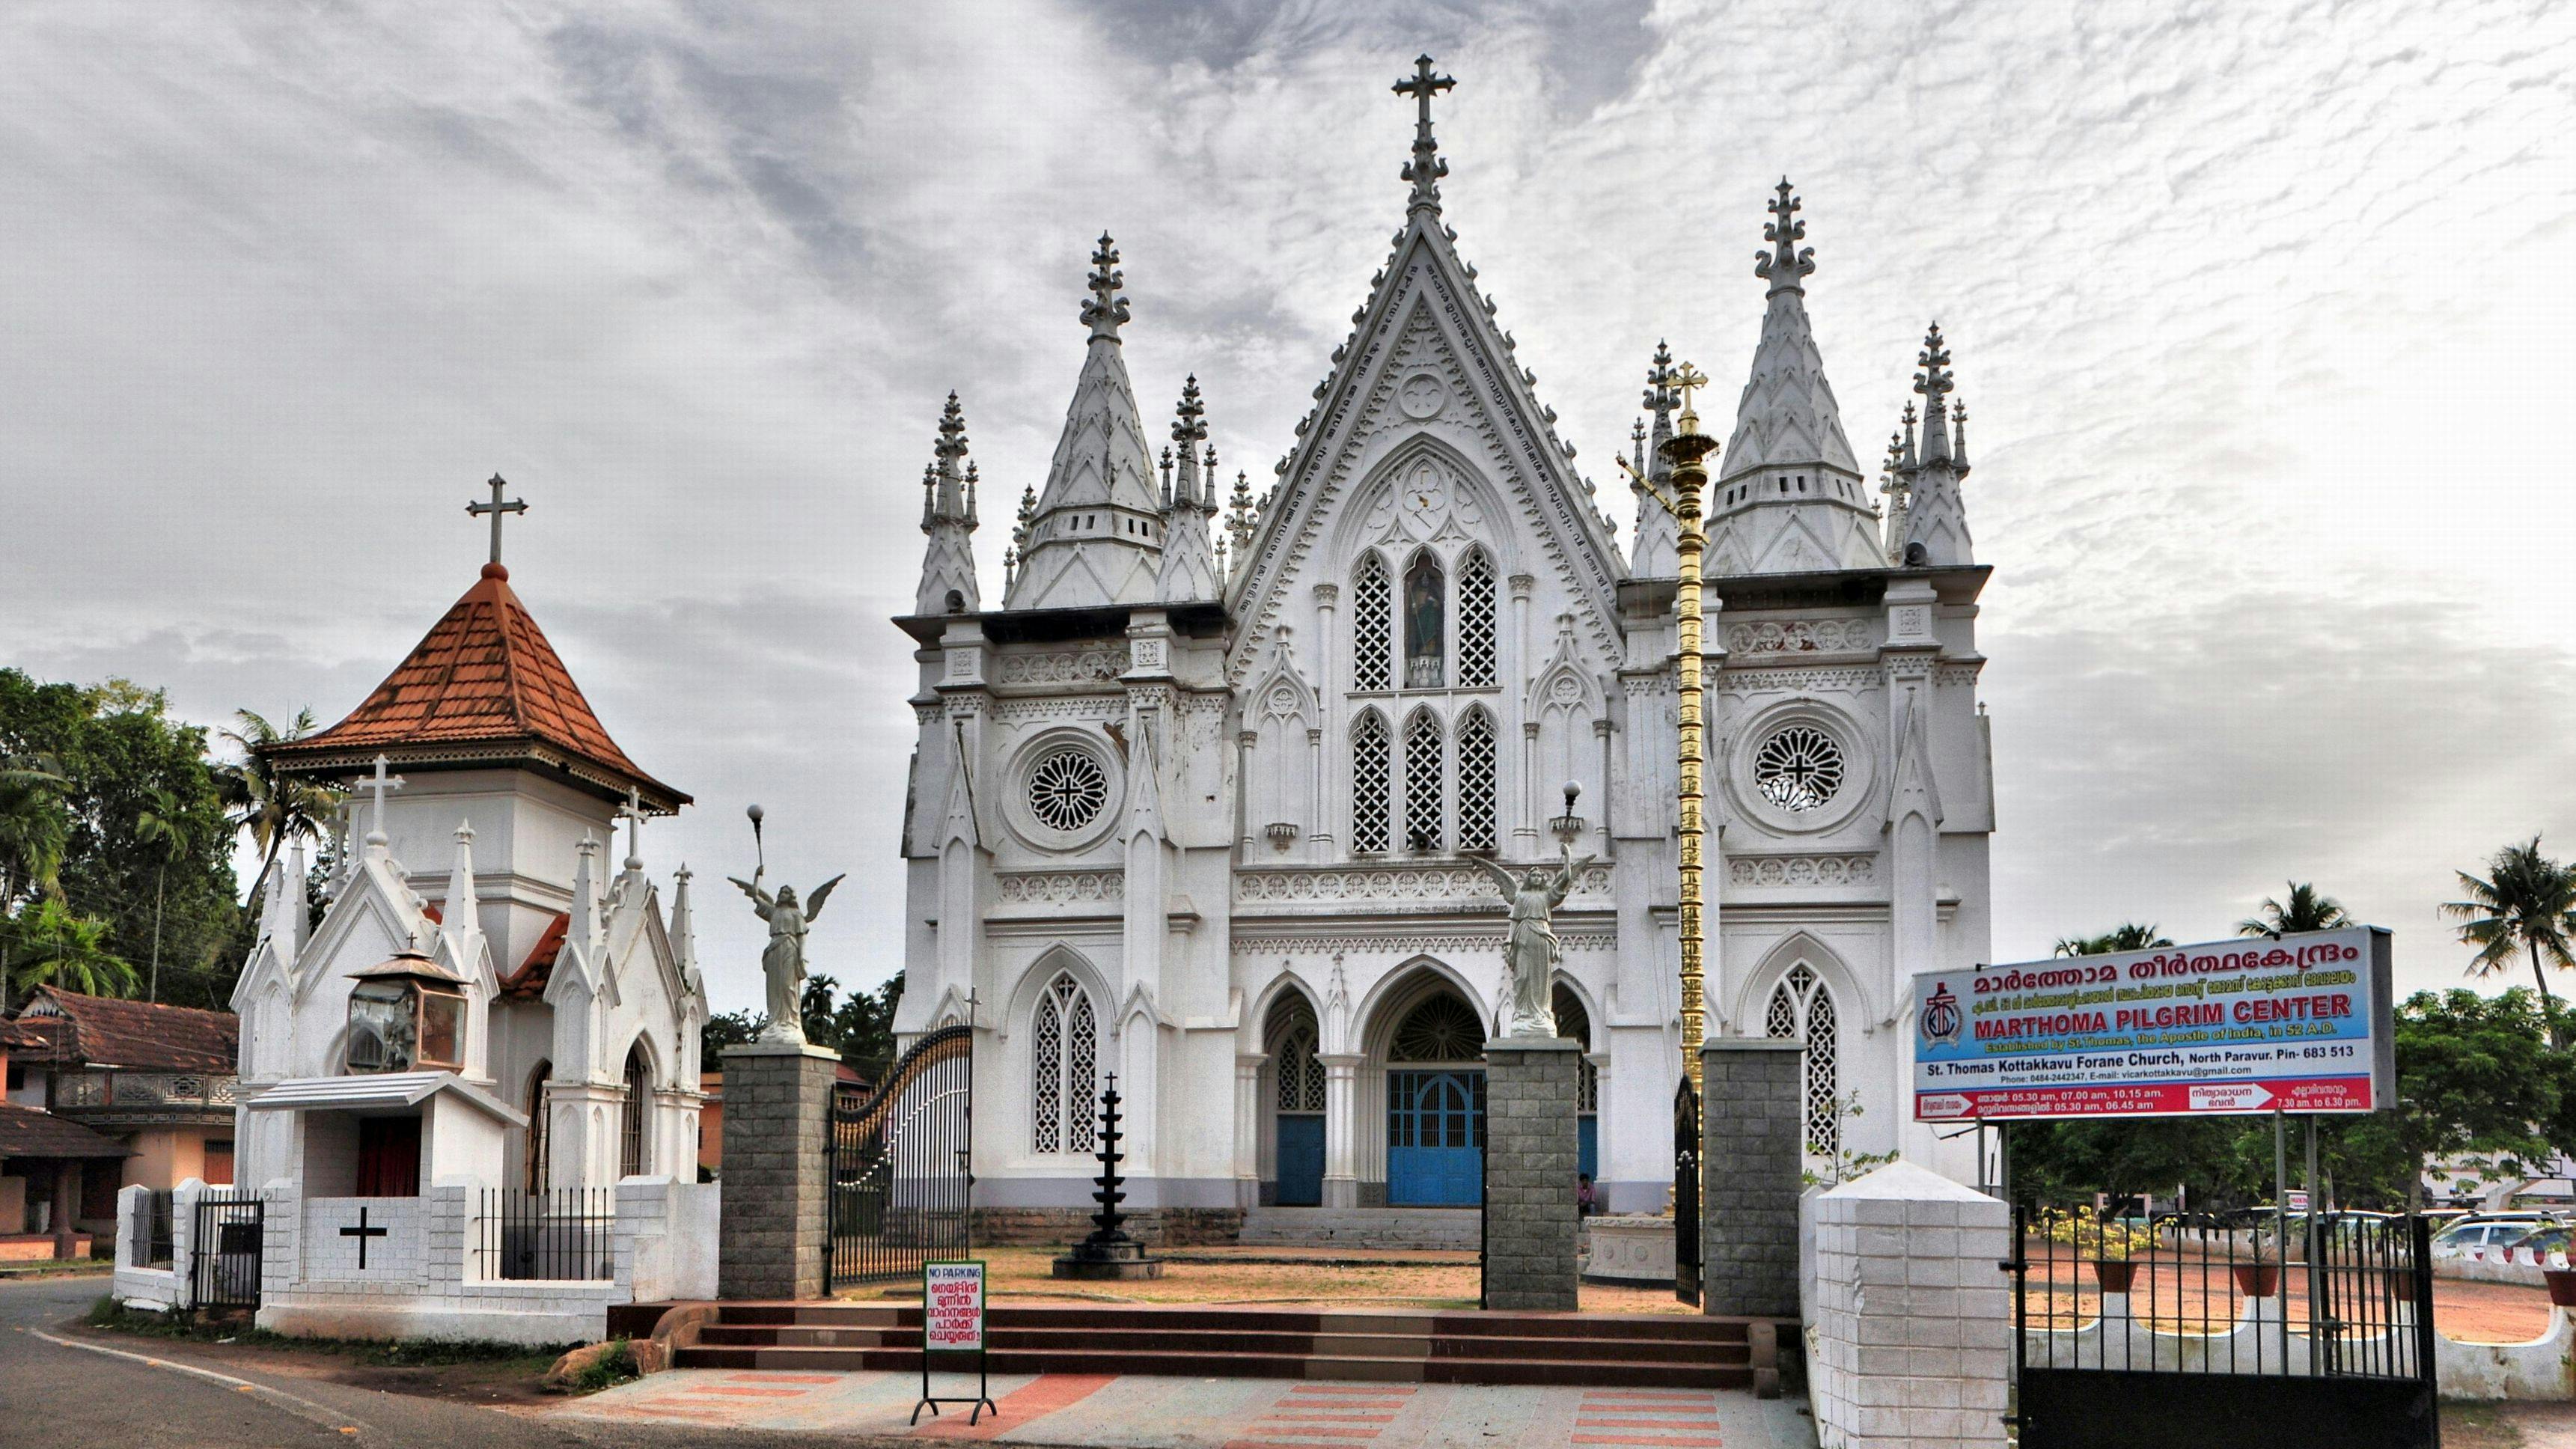 Kottakkavu Mar Thoma Syro-Malabar Pilgrim Church as seen today